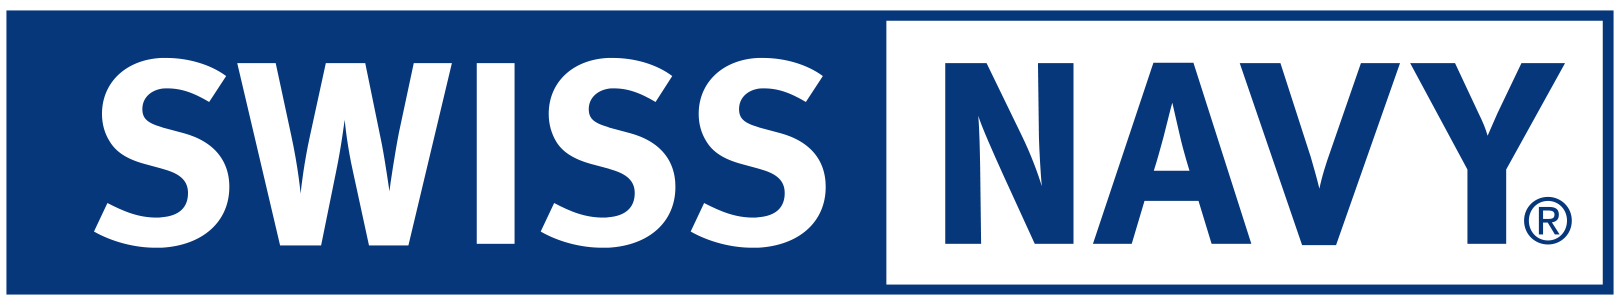 Swiss Navy Brand Logo